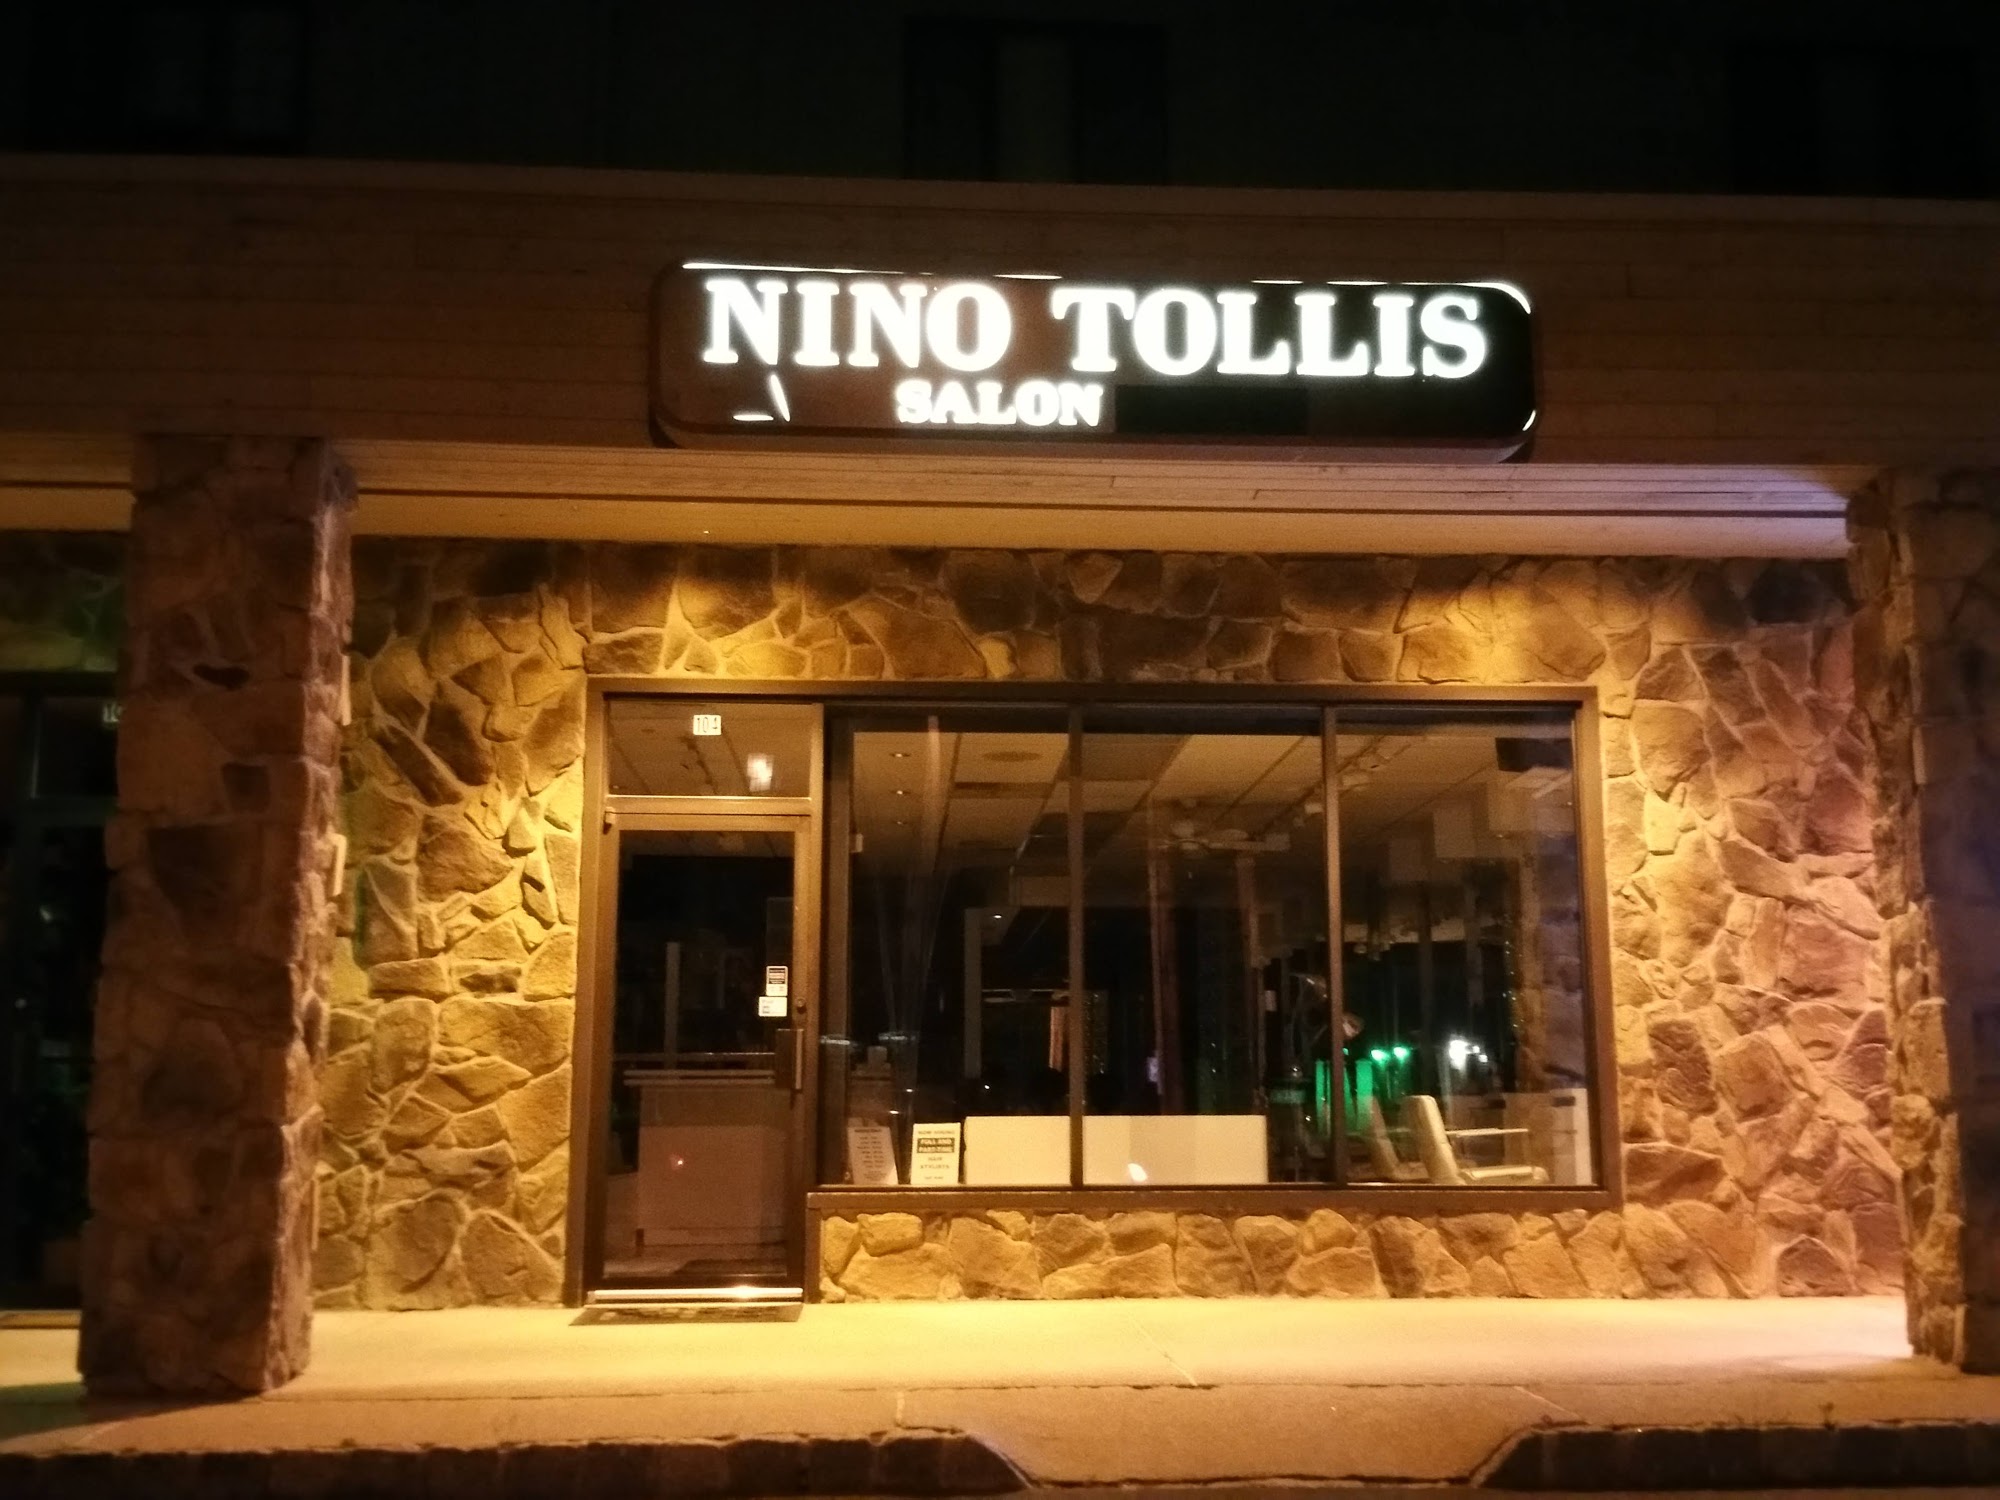 Nino Tollis Salon